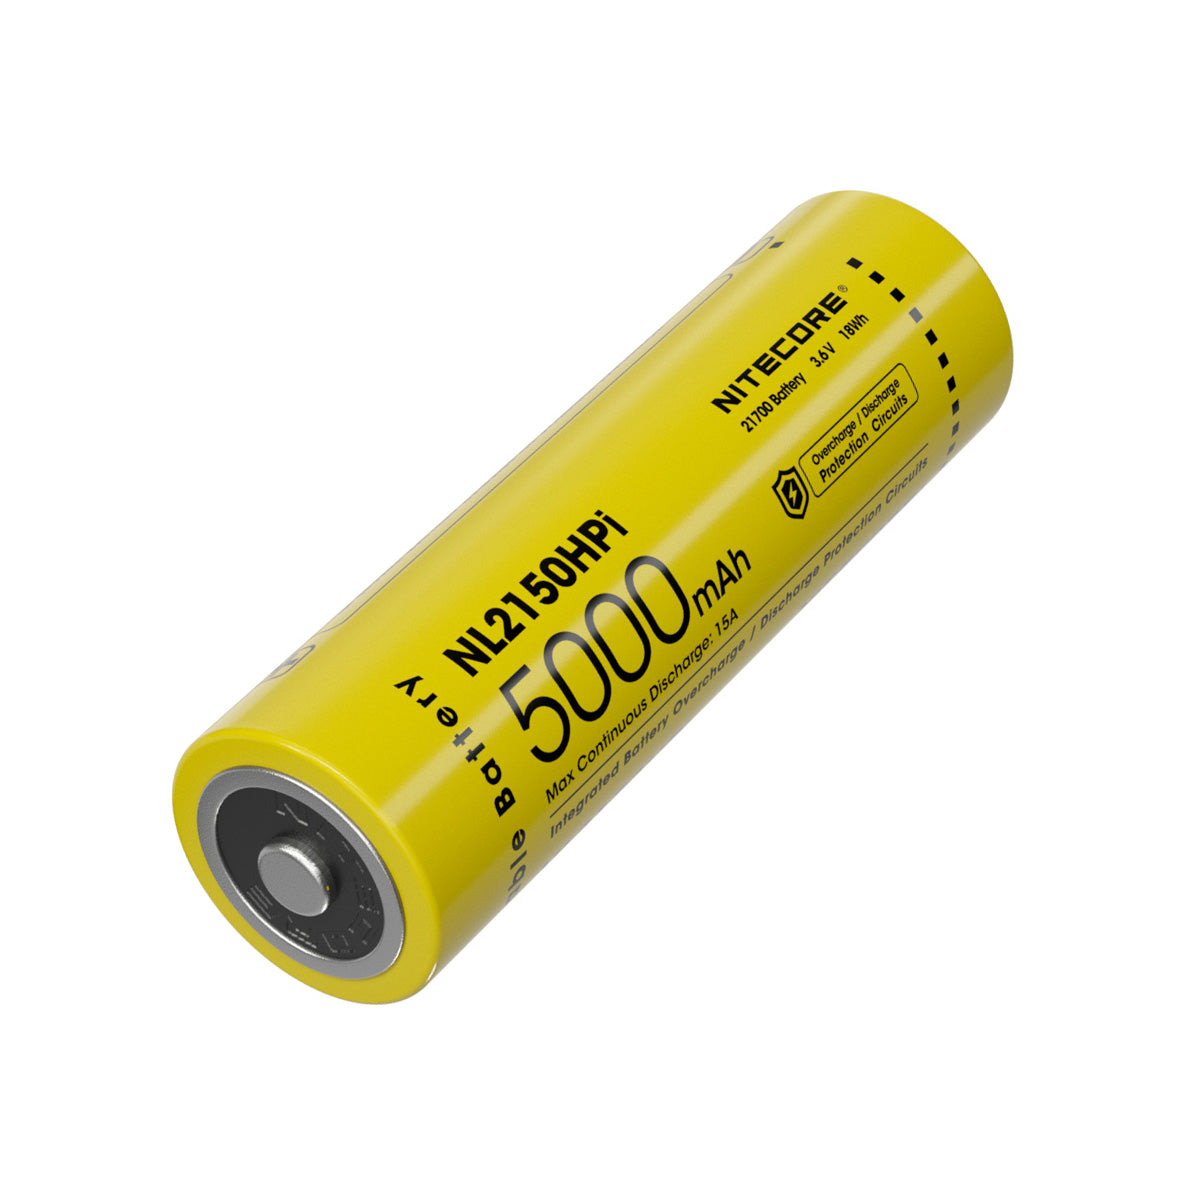 Nitecore 21700I Rechargeable Battery 3.6V 5000Mah